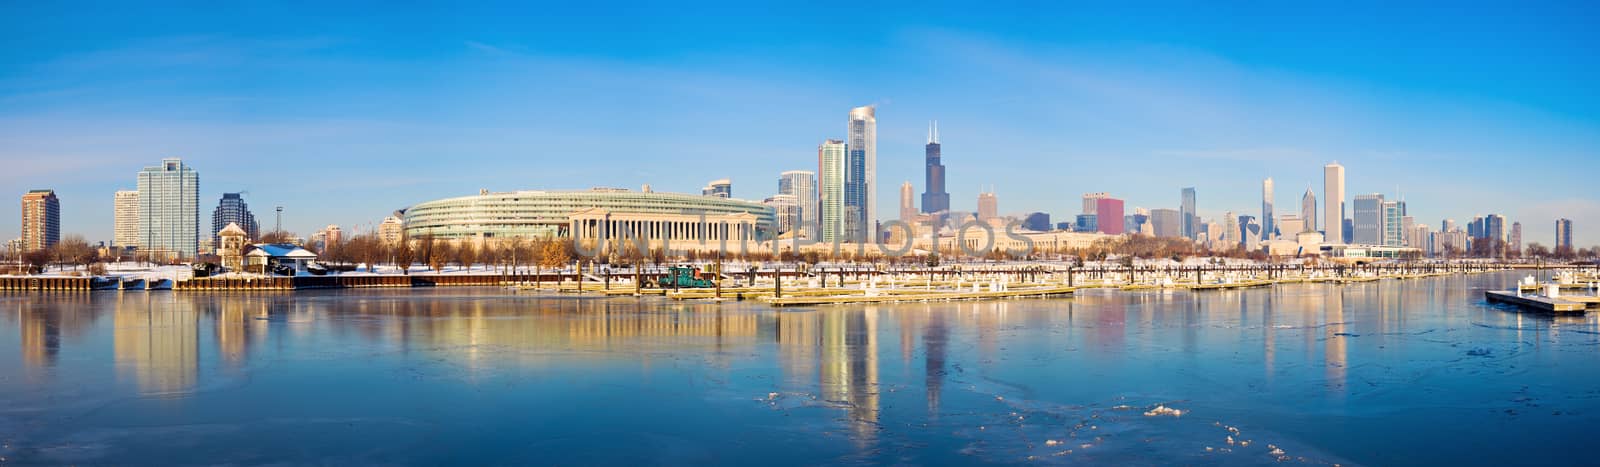 Winter panorama of Chicago from frozen marina. Chicago, Illinois, USA.